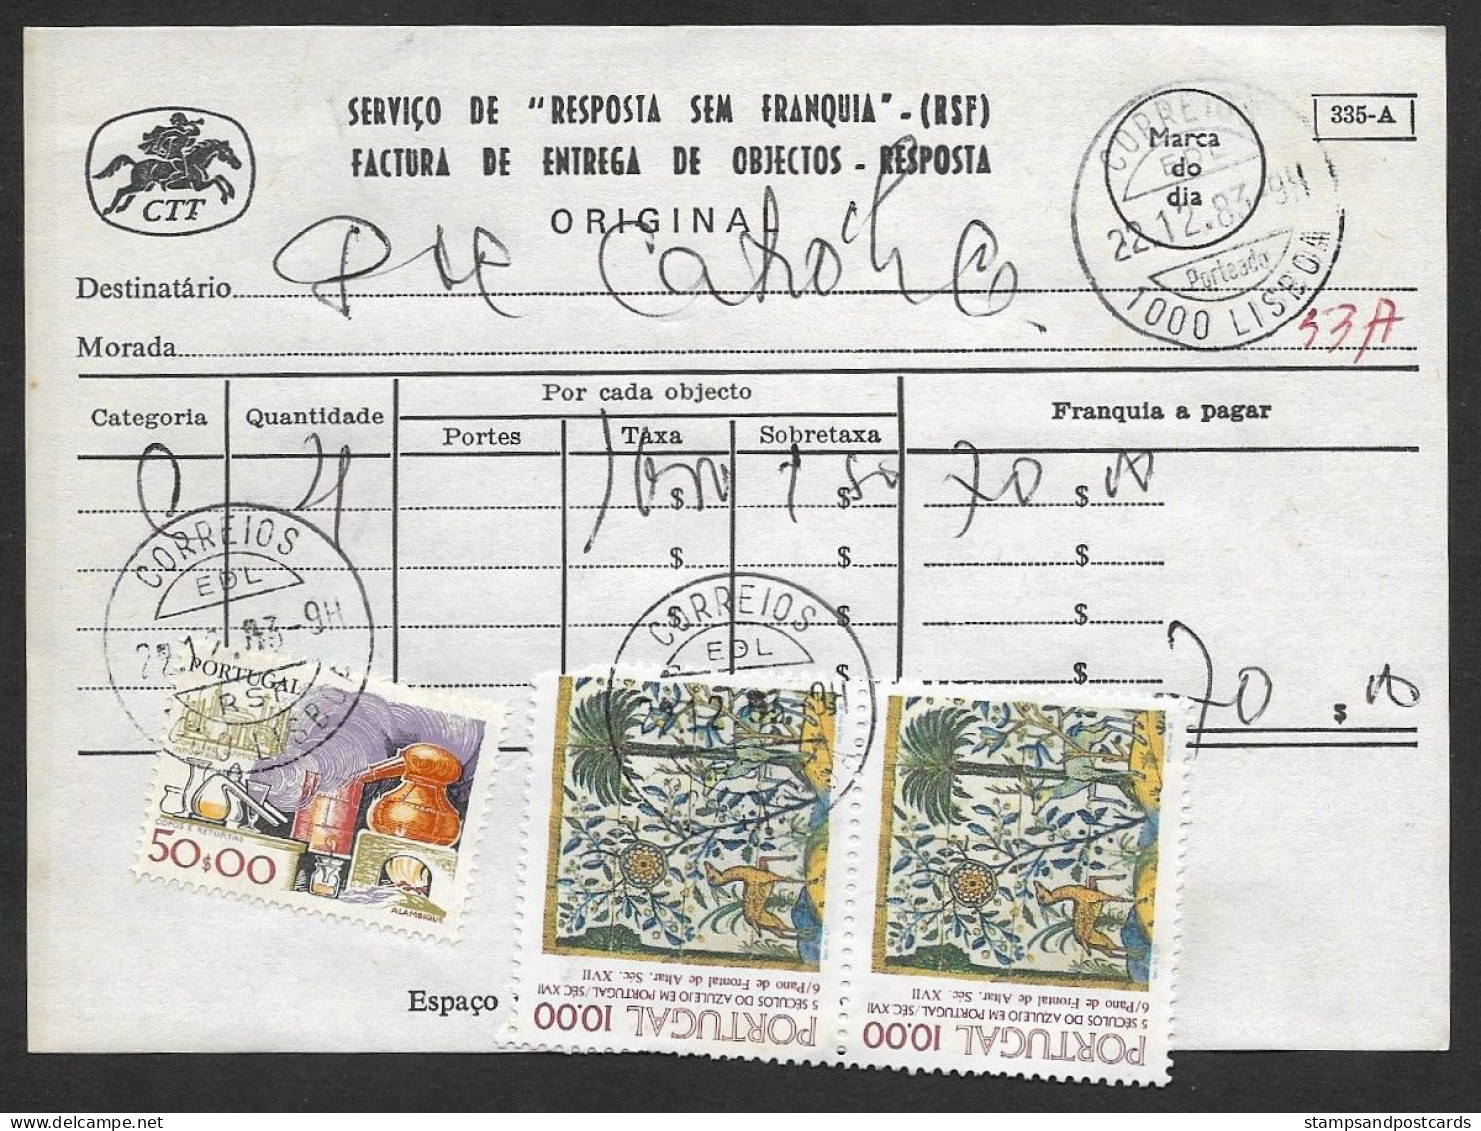 Portugal Document Timbré Avec Cachet A Date RSF Réponse Payée 1983 Date Stamp Business Reply Service - Poststempel (Marcophilie)